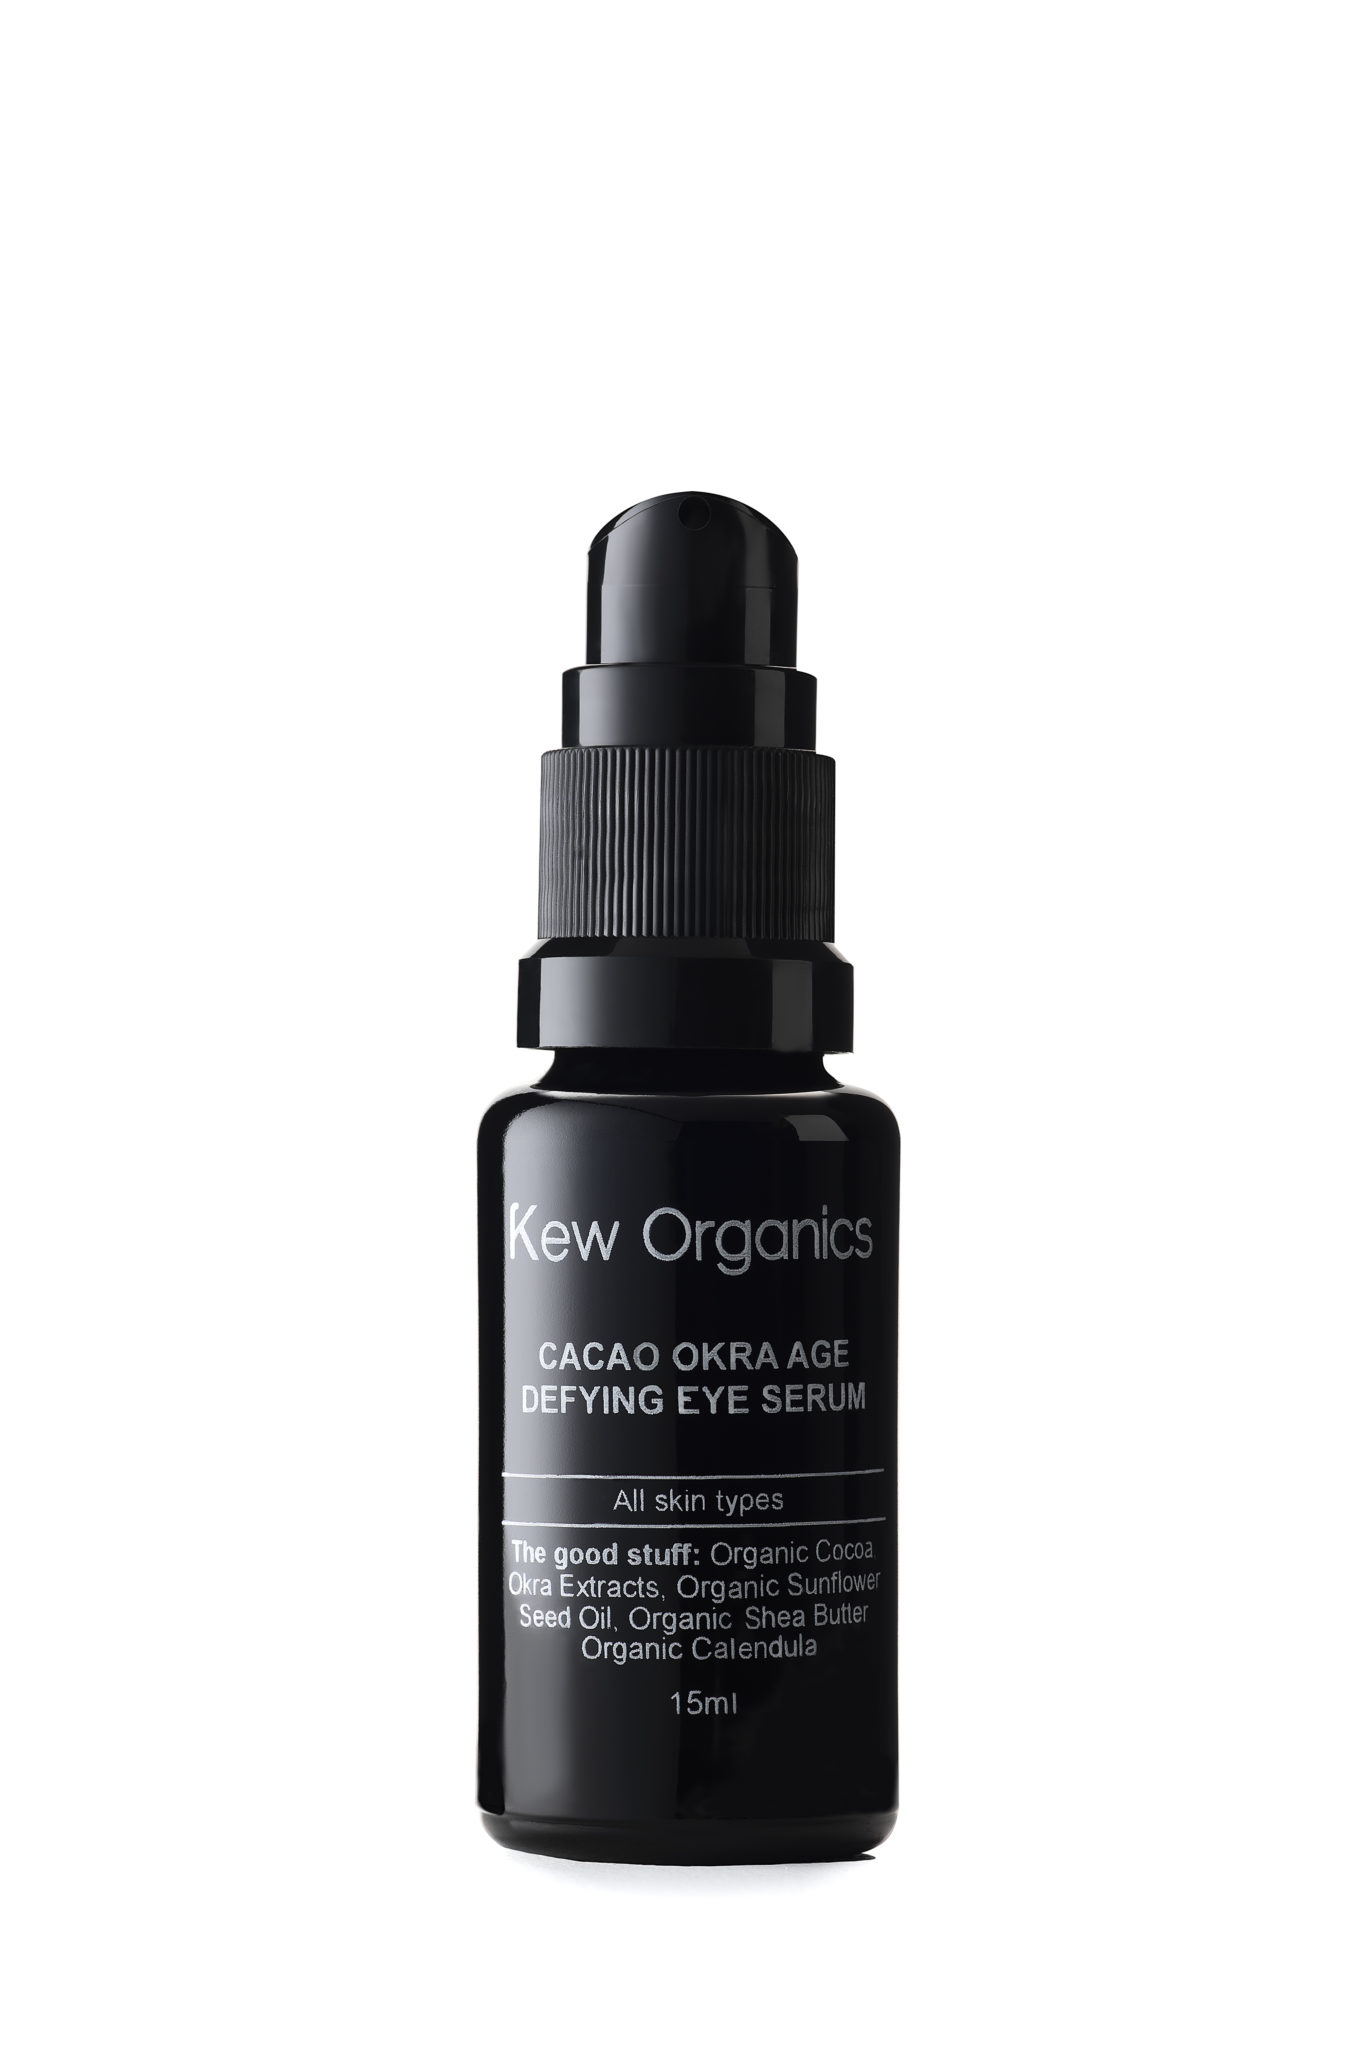 a black bottle of Kew Organics eye serum shot in studio